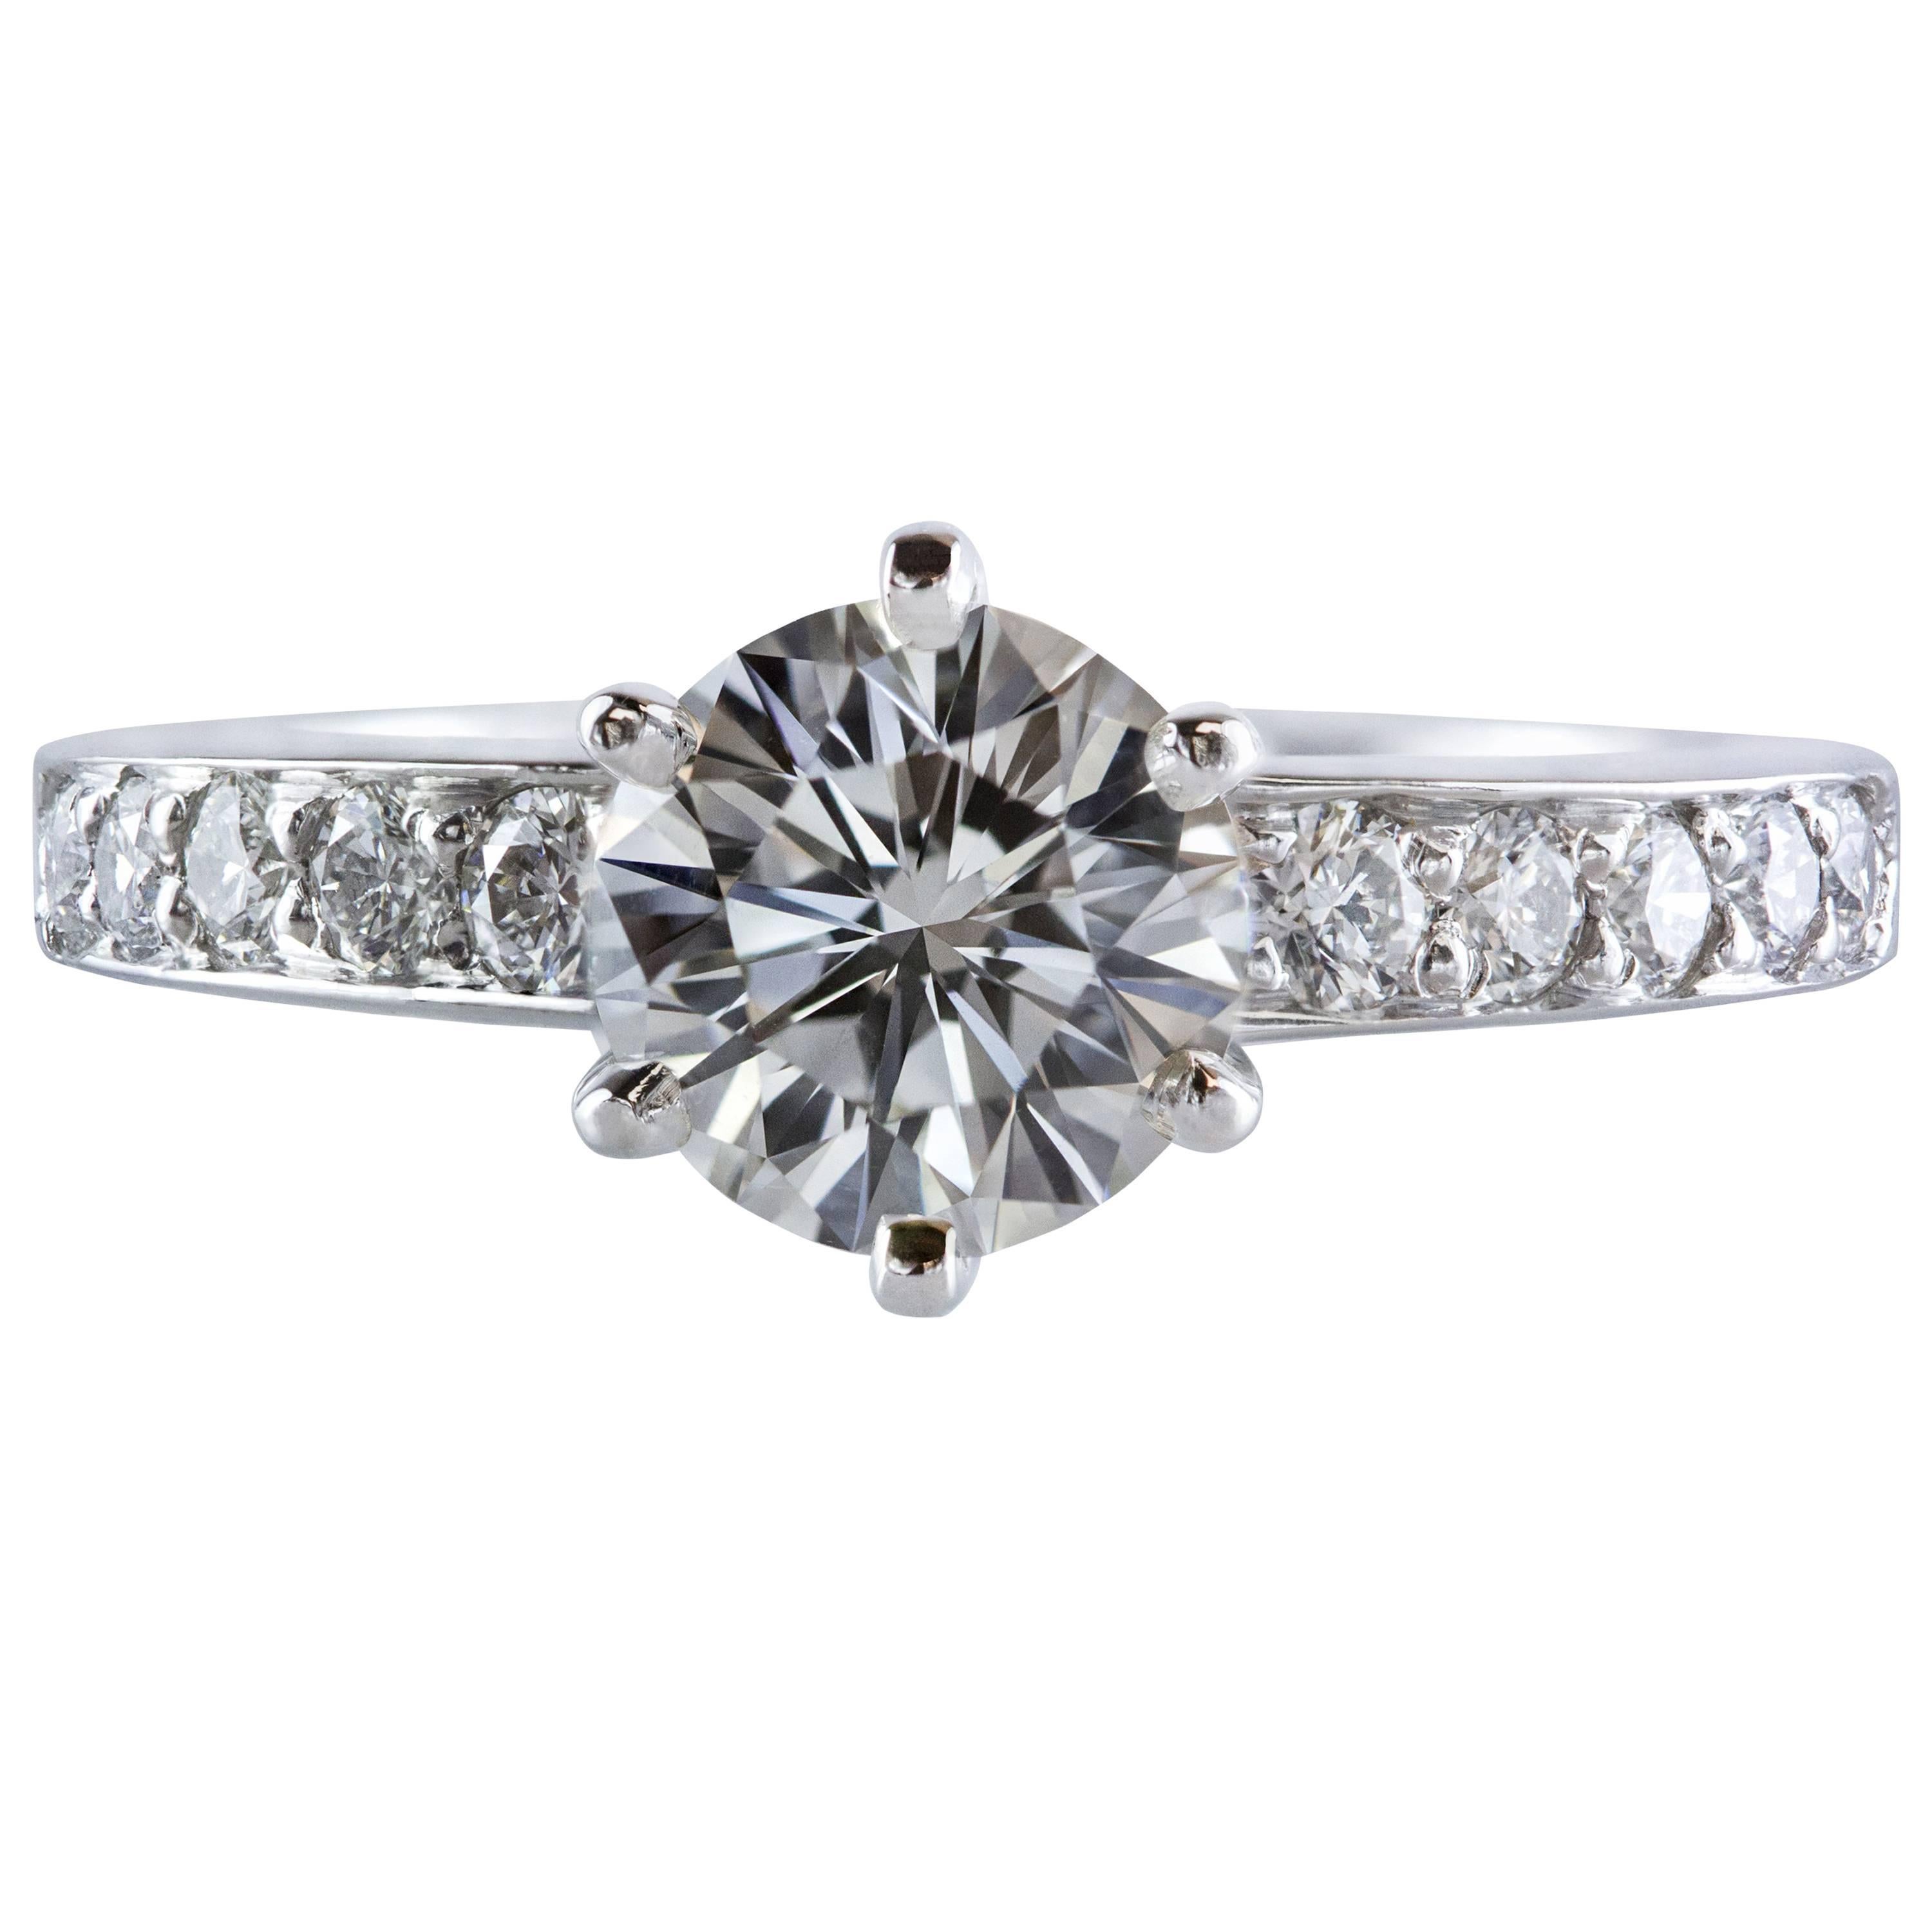 Tiffany & Co 1.01 Carat Round Diamond Platinum Engagement Solitaire Ring